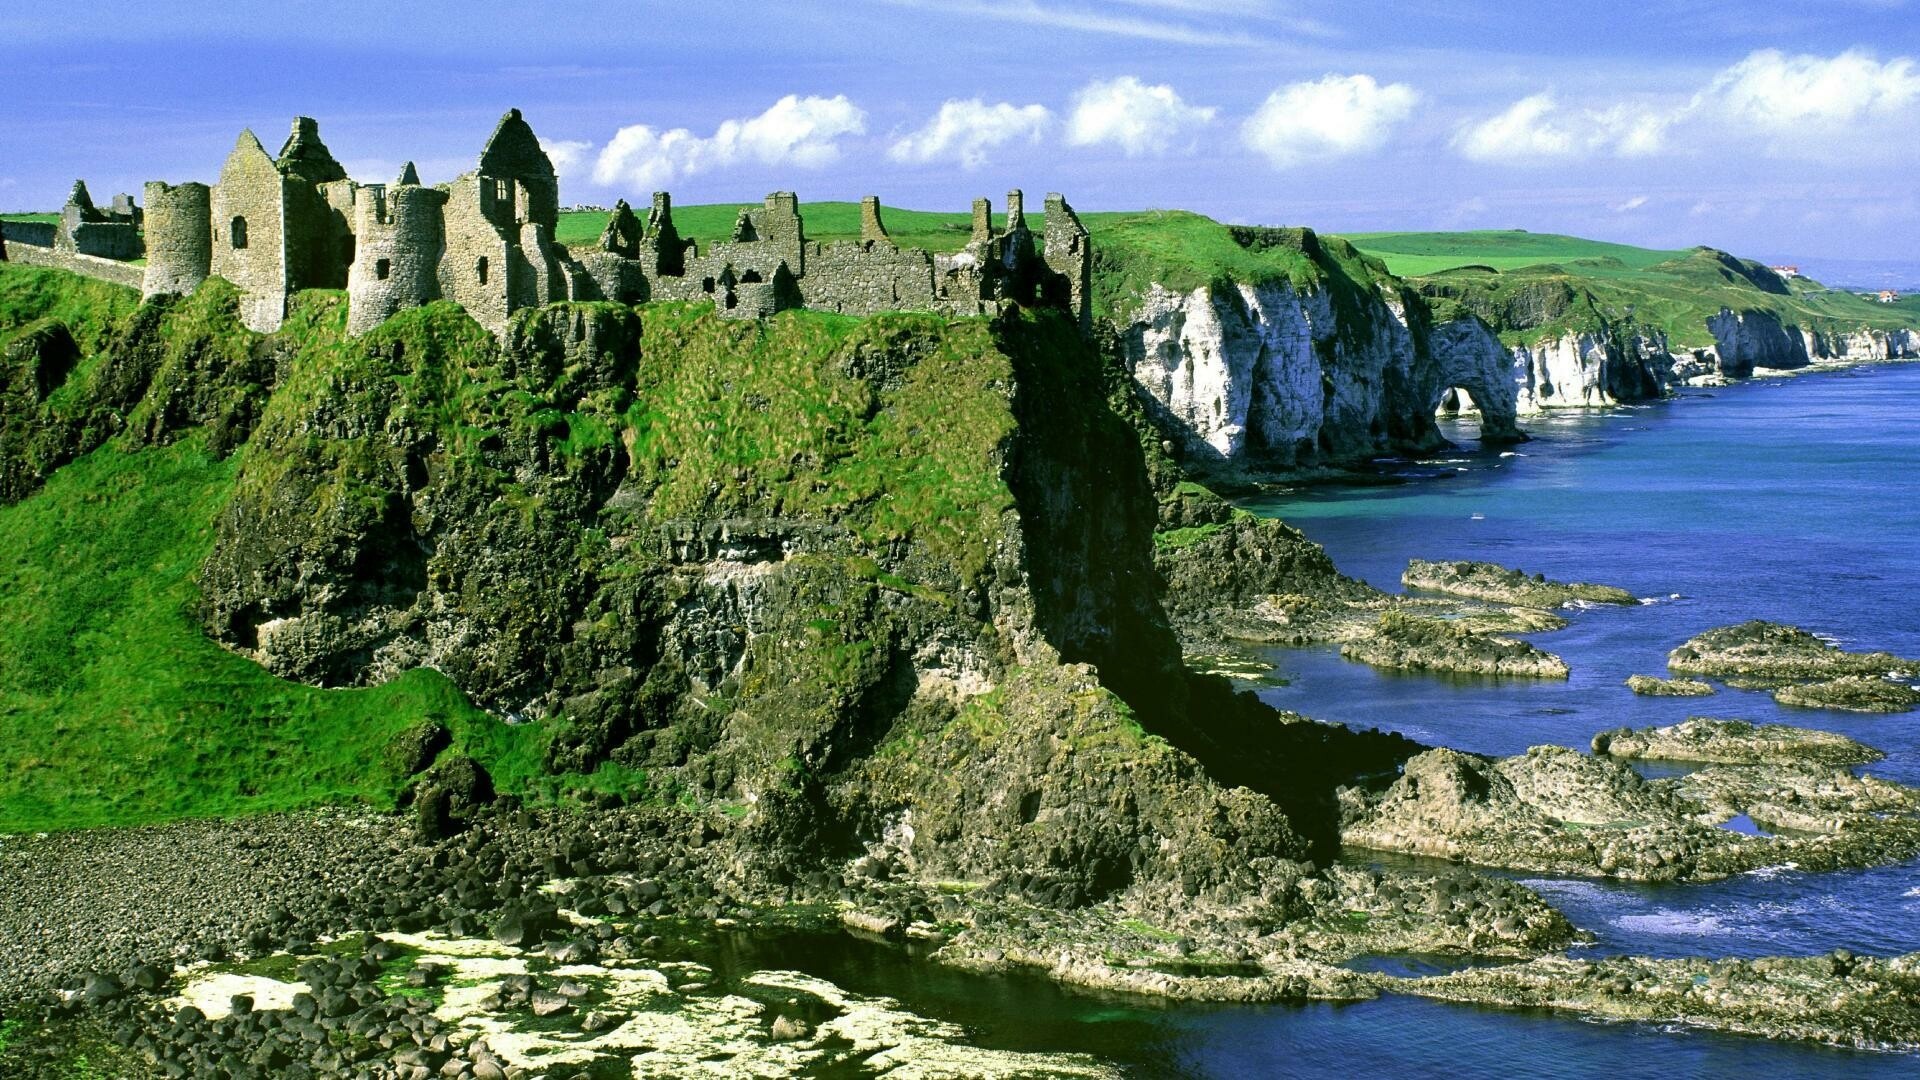 Irish landscapes, HD wallpapers, Mobile-friendly, Stunning visuals, 1920x1080 Full HD Desktop